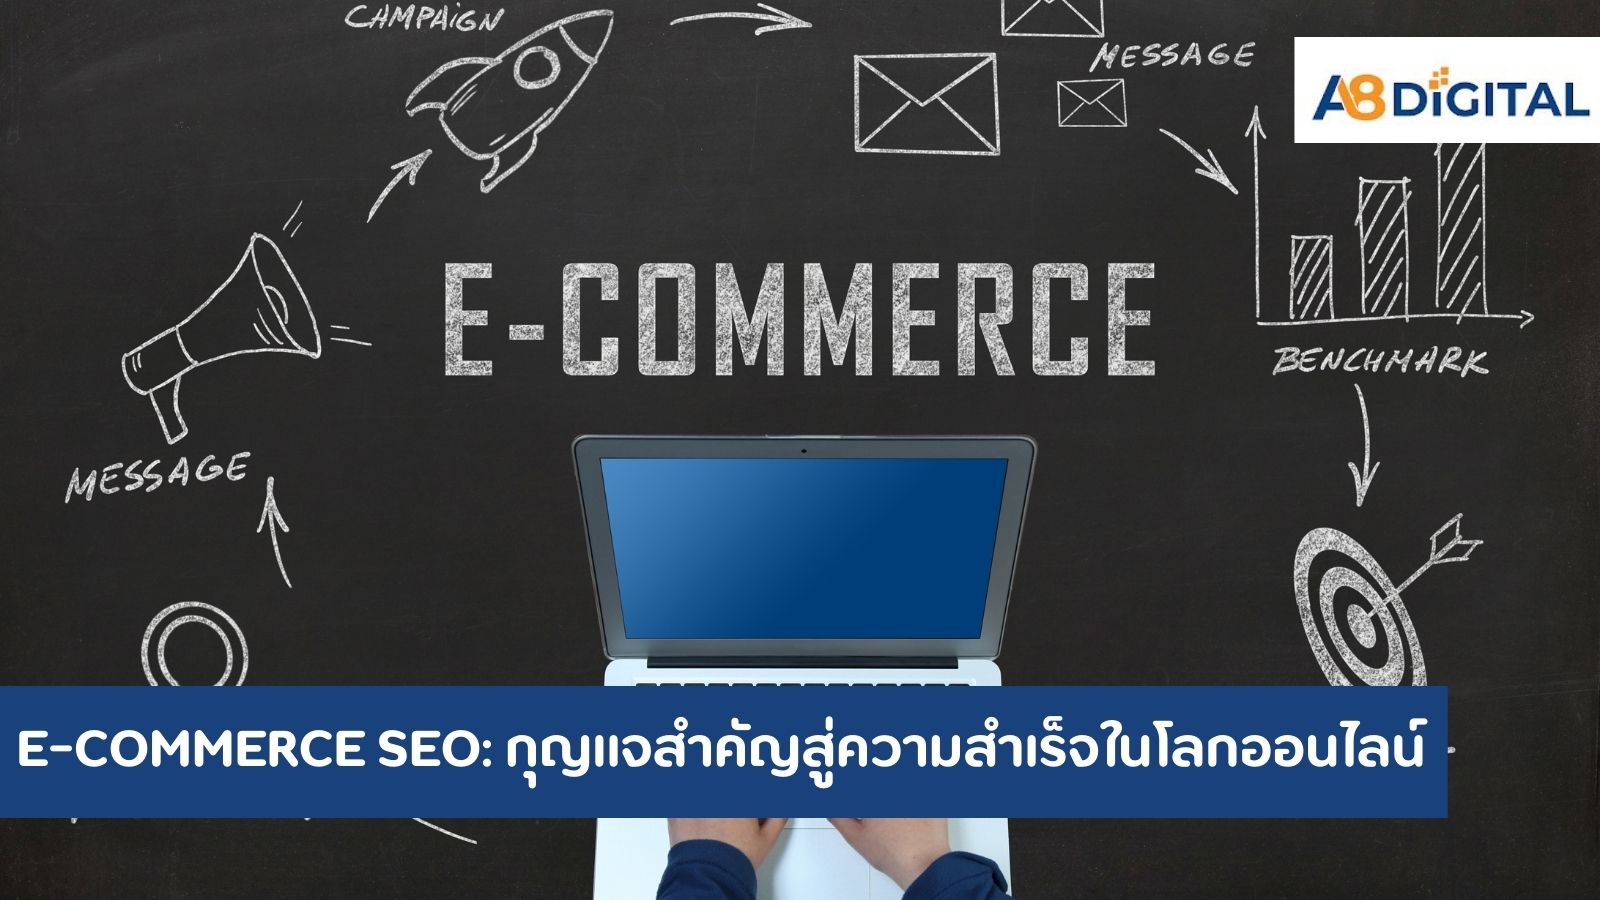 E-COMMERCE SEO กุญแจสำคัญสู่ความสำเร็จในโลกออนไลน์